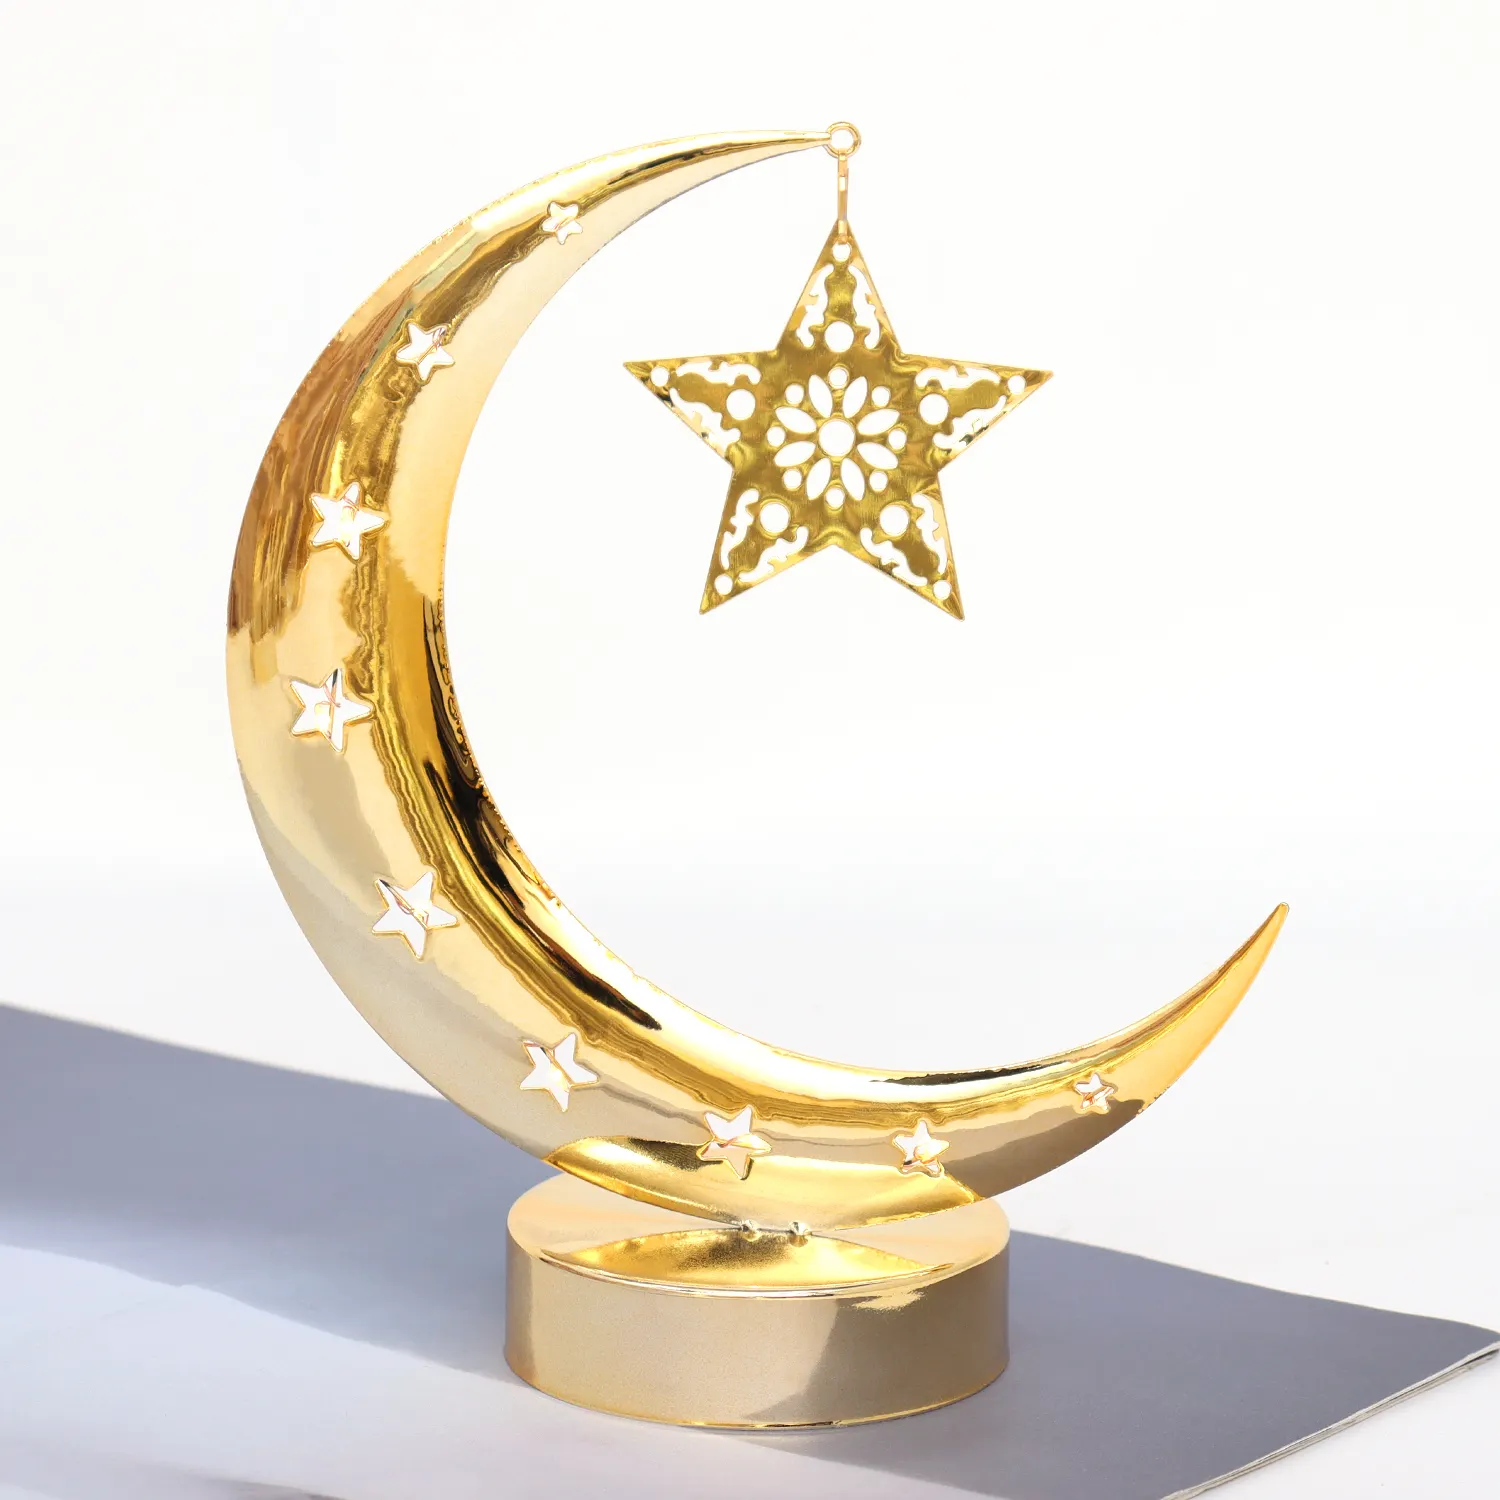 Pafu New Islamic Home Decor Ramadan Eid Gift Table Top Gold Metal Table Centrepiece Crescent Moon & Hanging Star